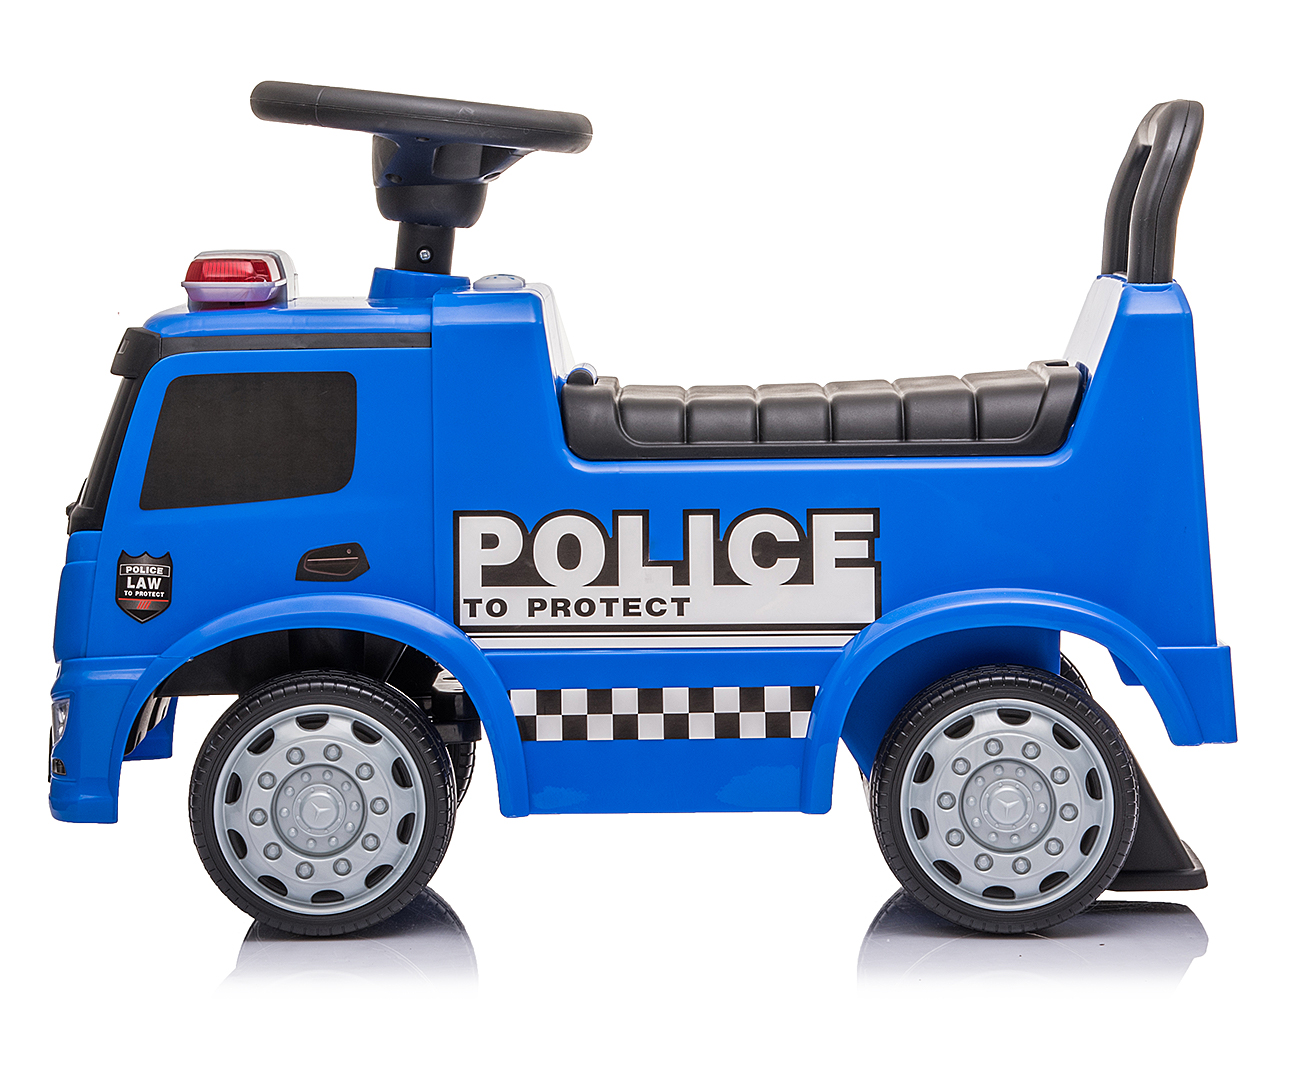 Pojazd MERCEDES ANTOS - POLICE TRUCK